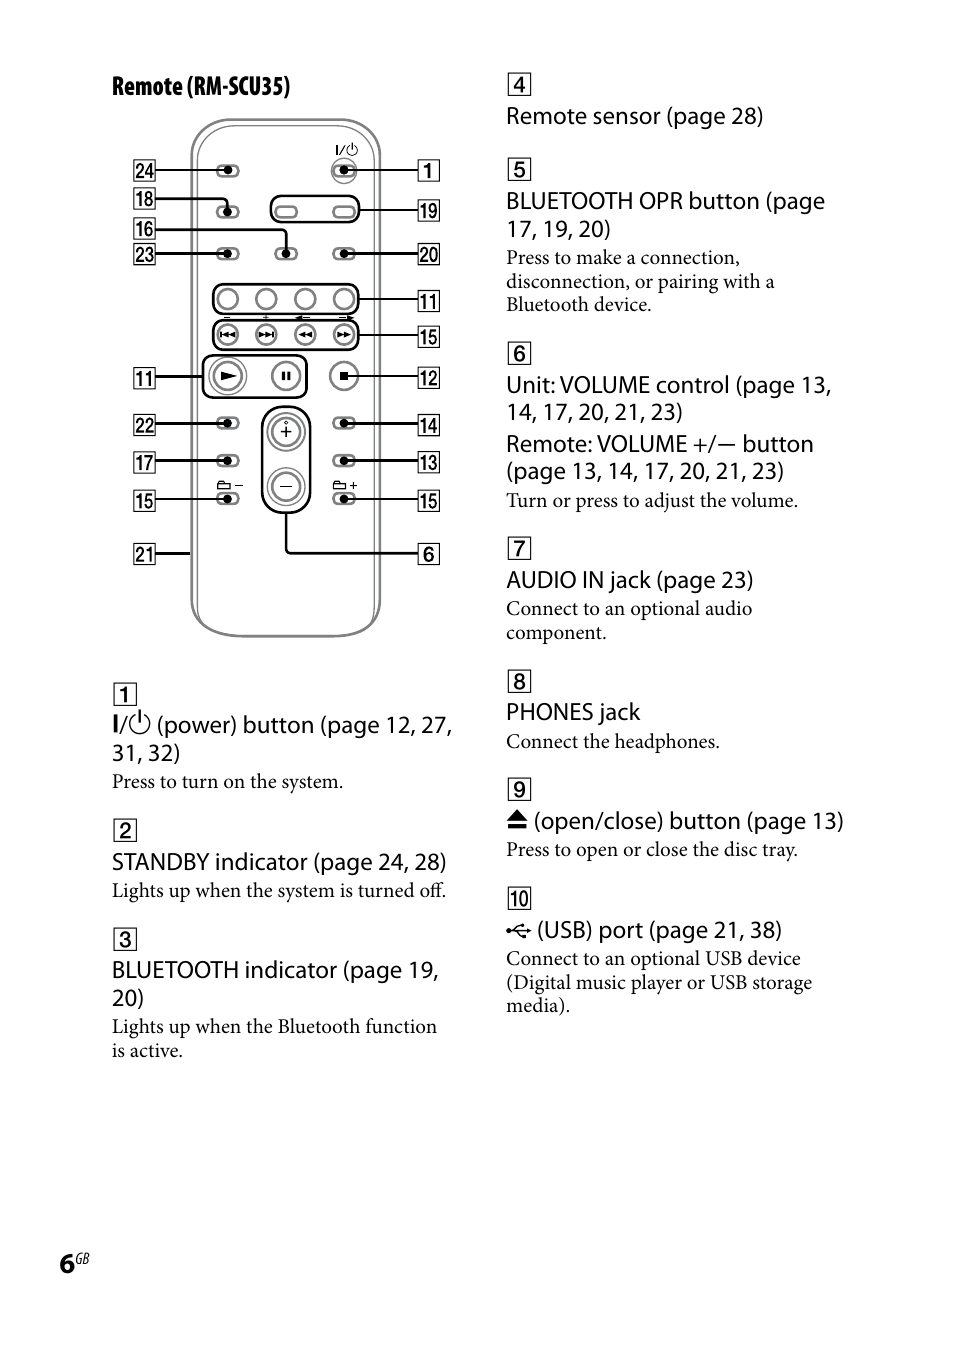 Remote (rm-scu35) | Sony CMT-HX5BT User Manual | Page 6 / 40